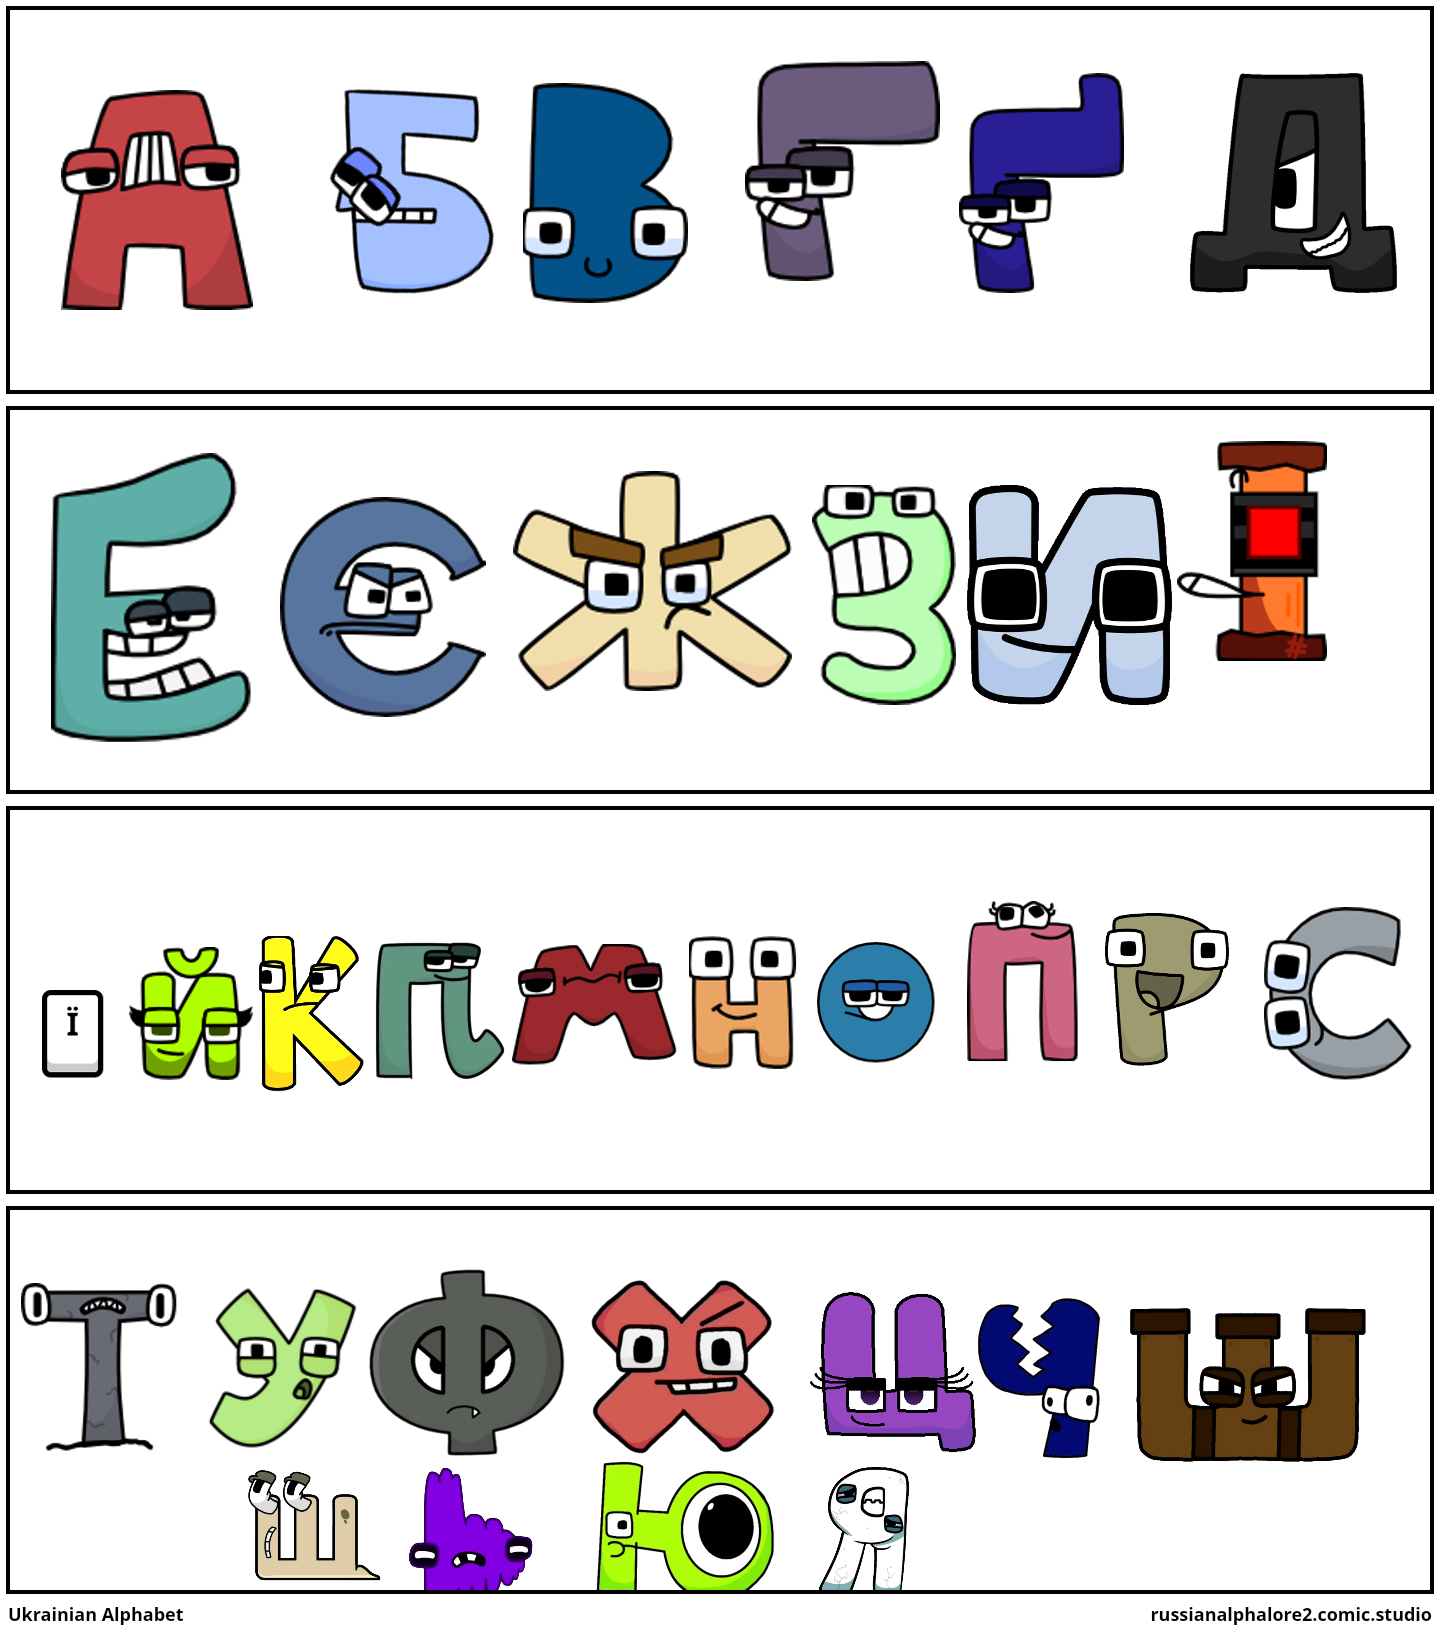 Ukranian alphabet lore - Comic Studio